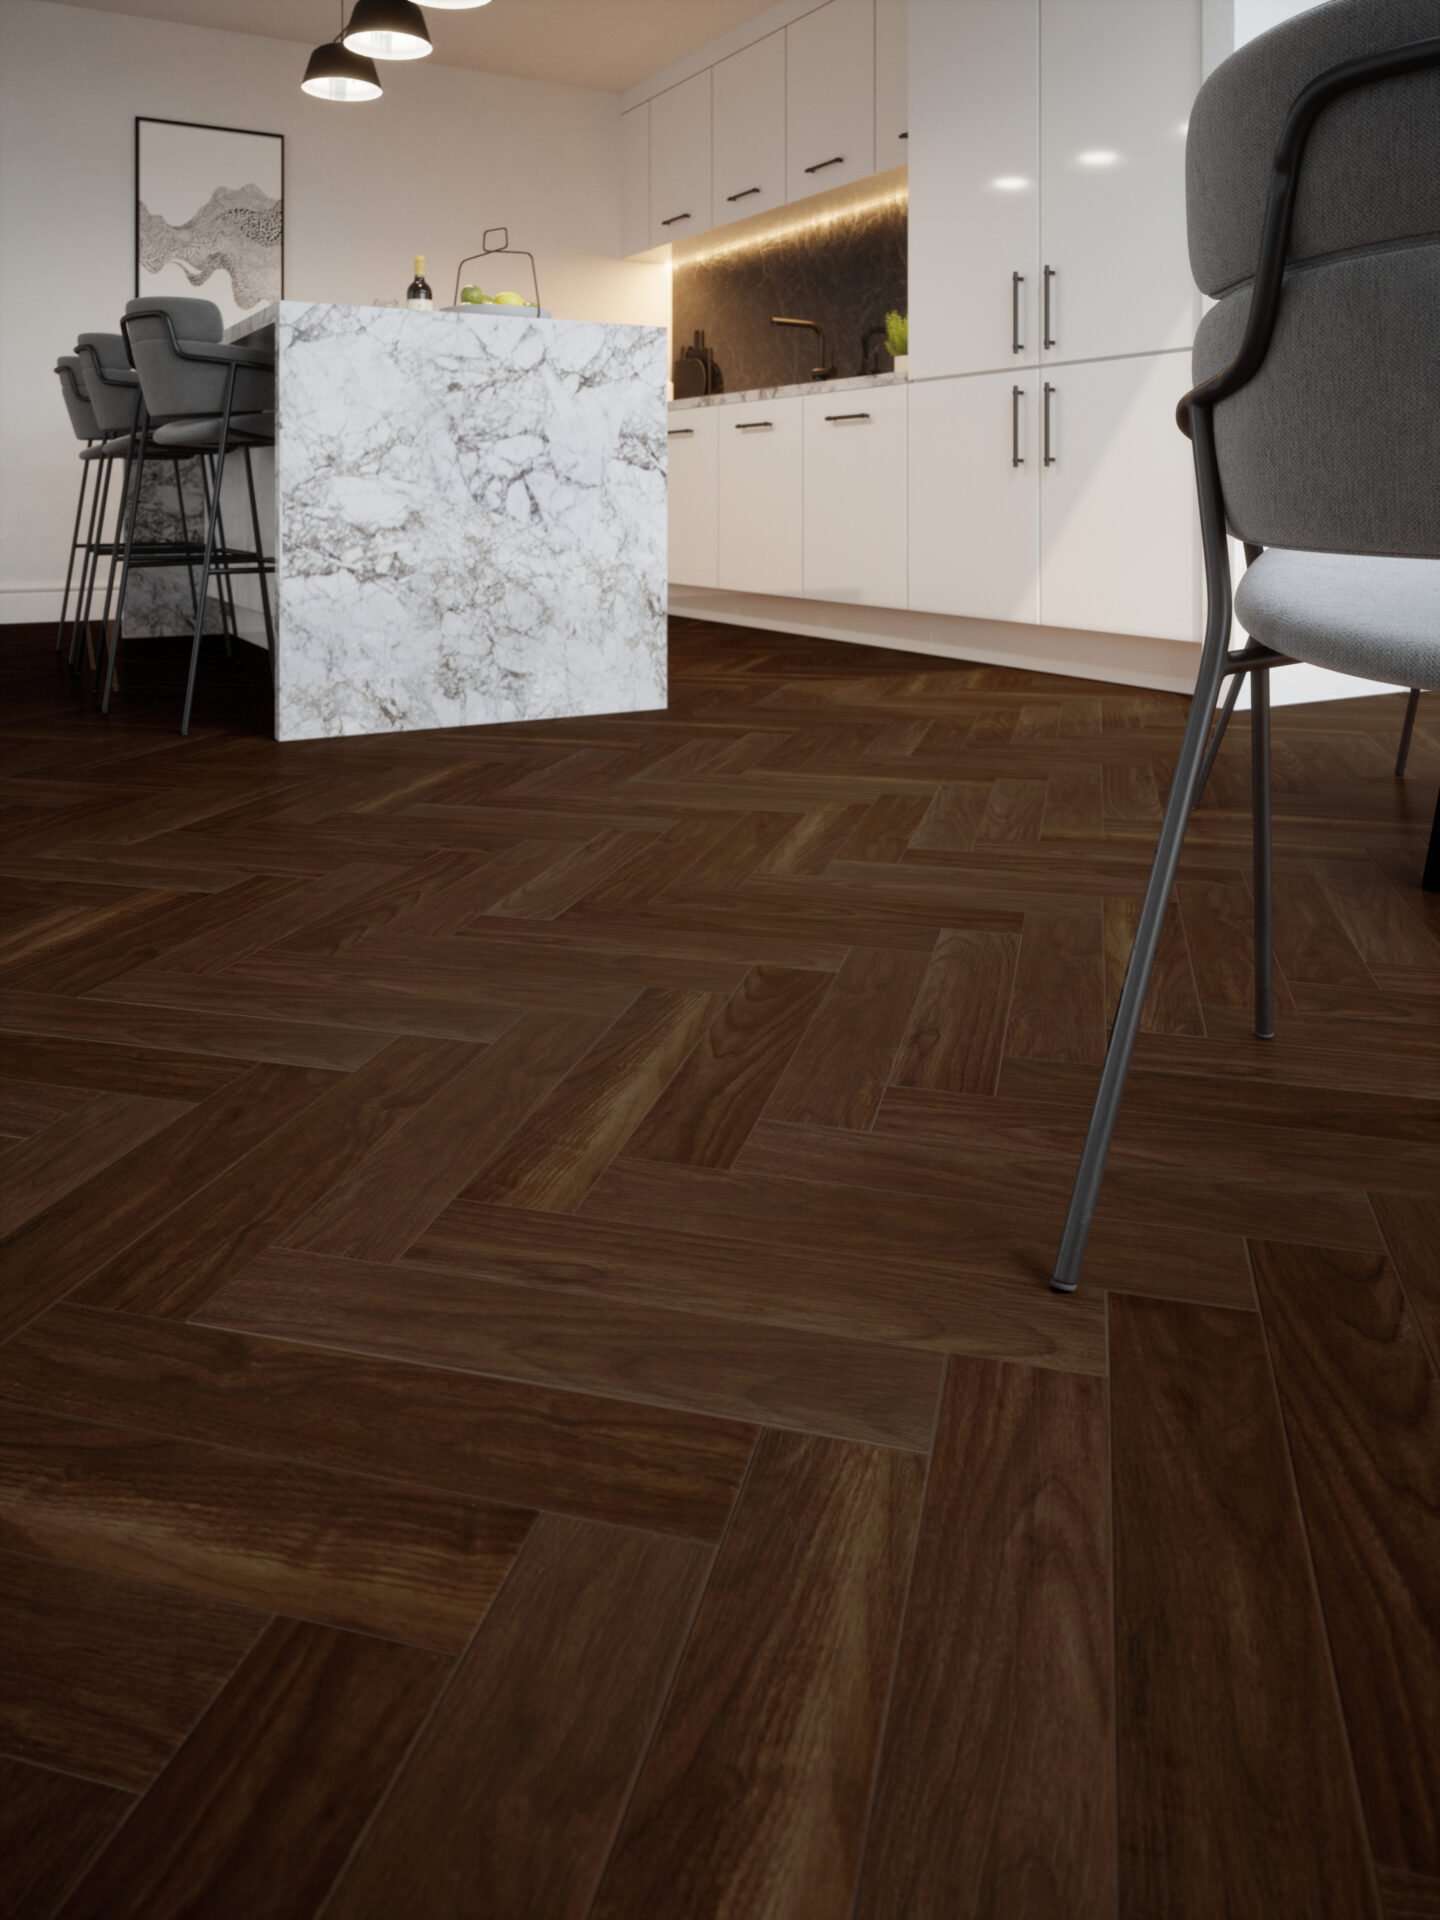 herringbone wood floor in a kitchen